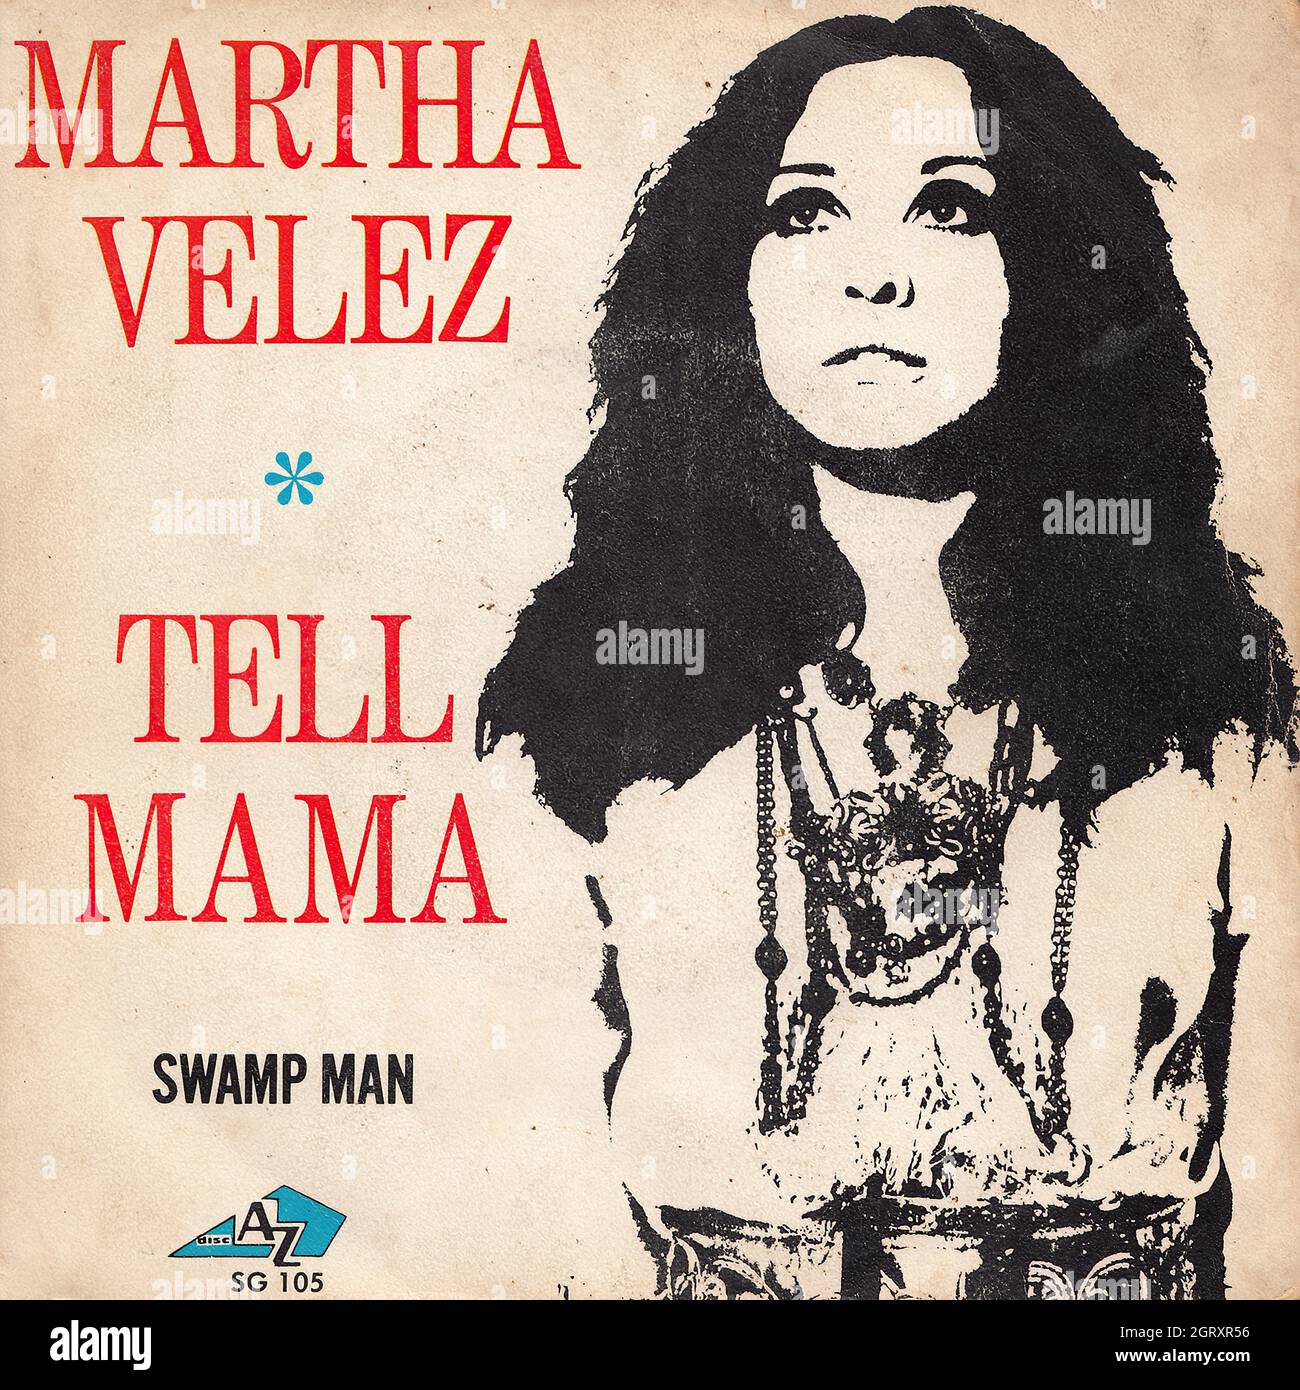 Martha Velez - Tell Mama - Swamp man 45rpm - Vintage Vinyl Record Cover Stock Photo